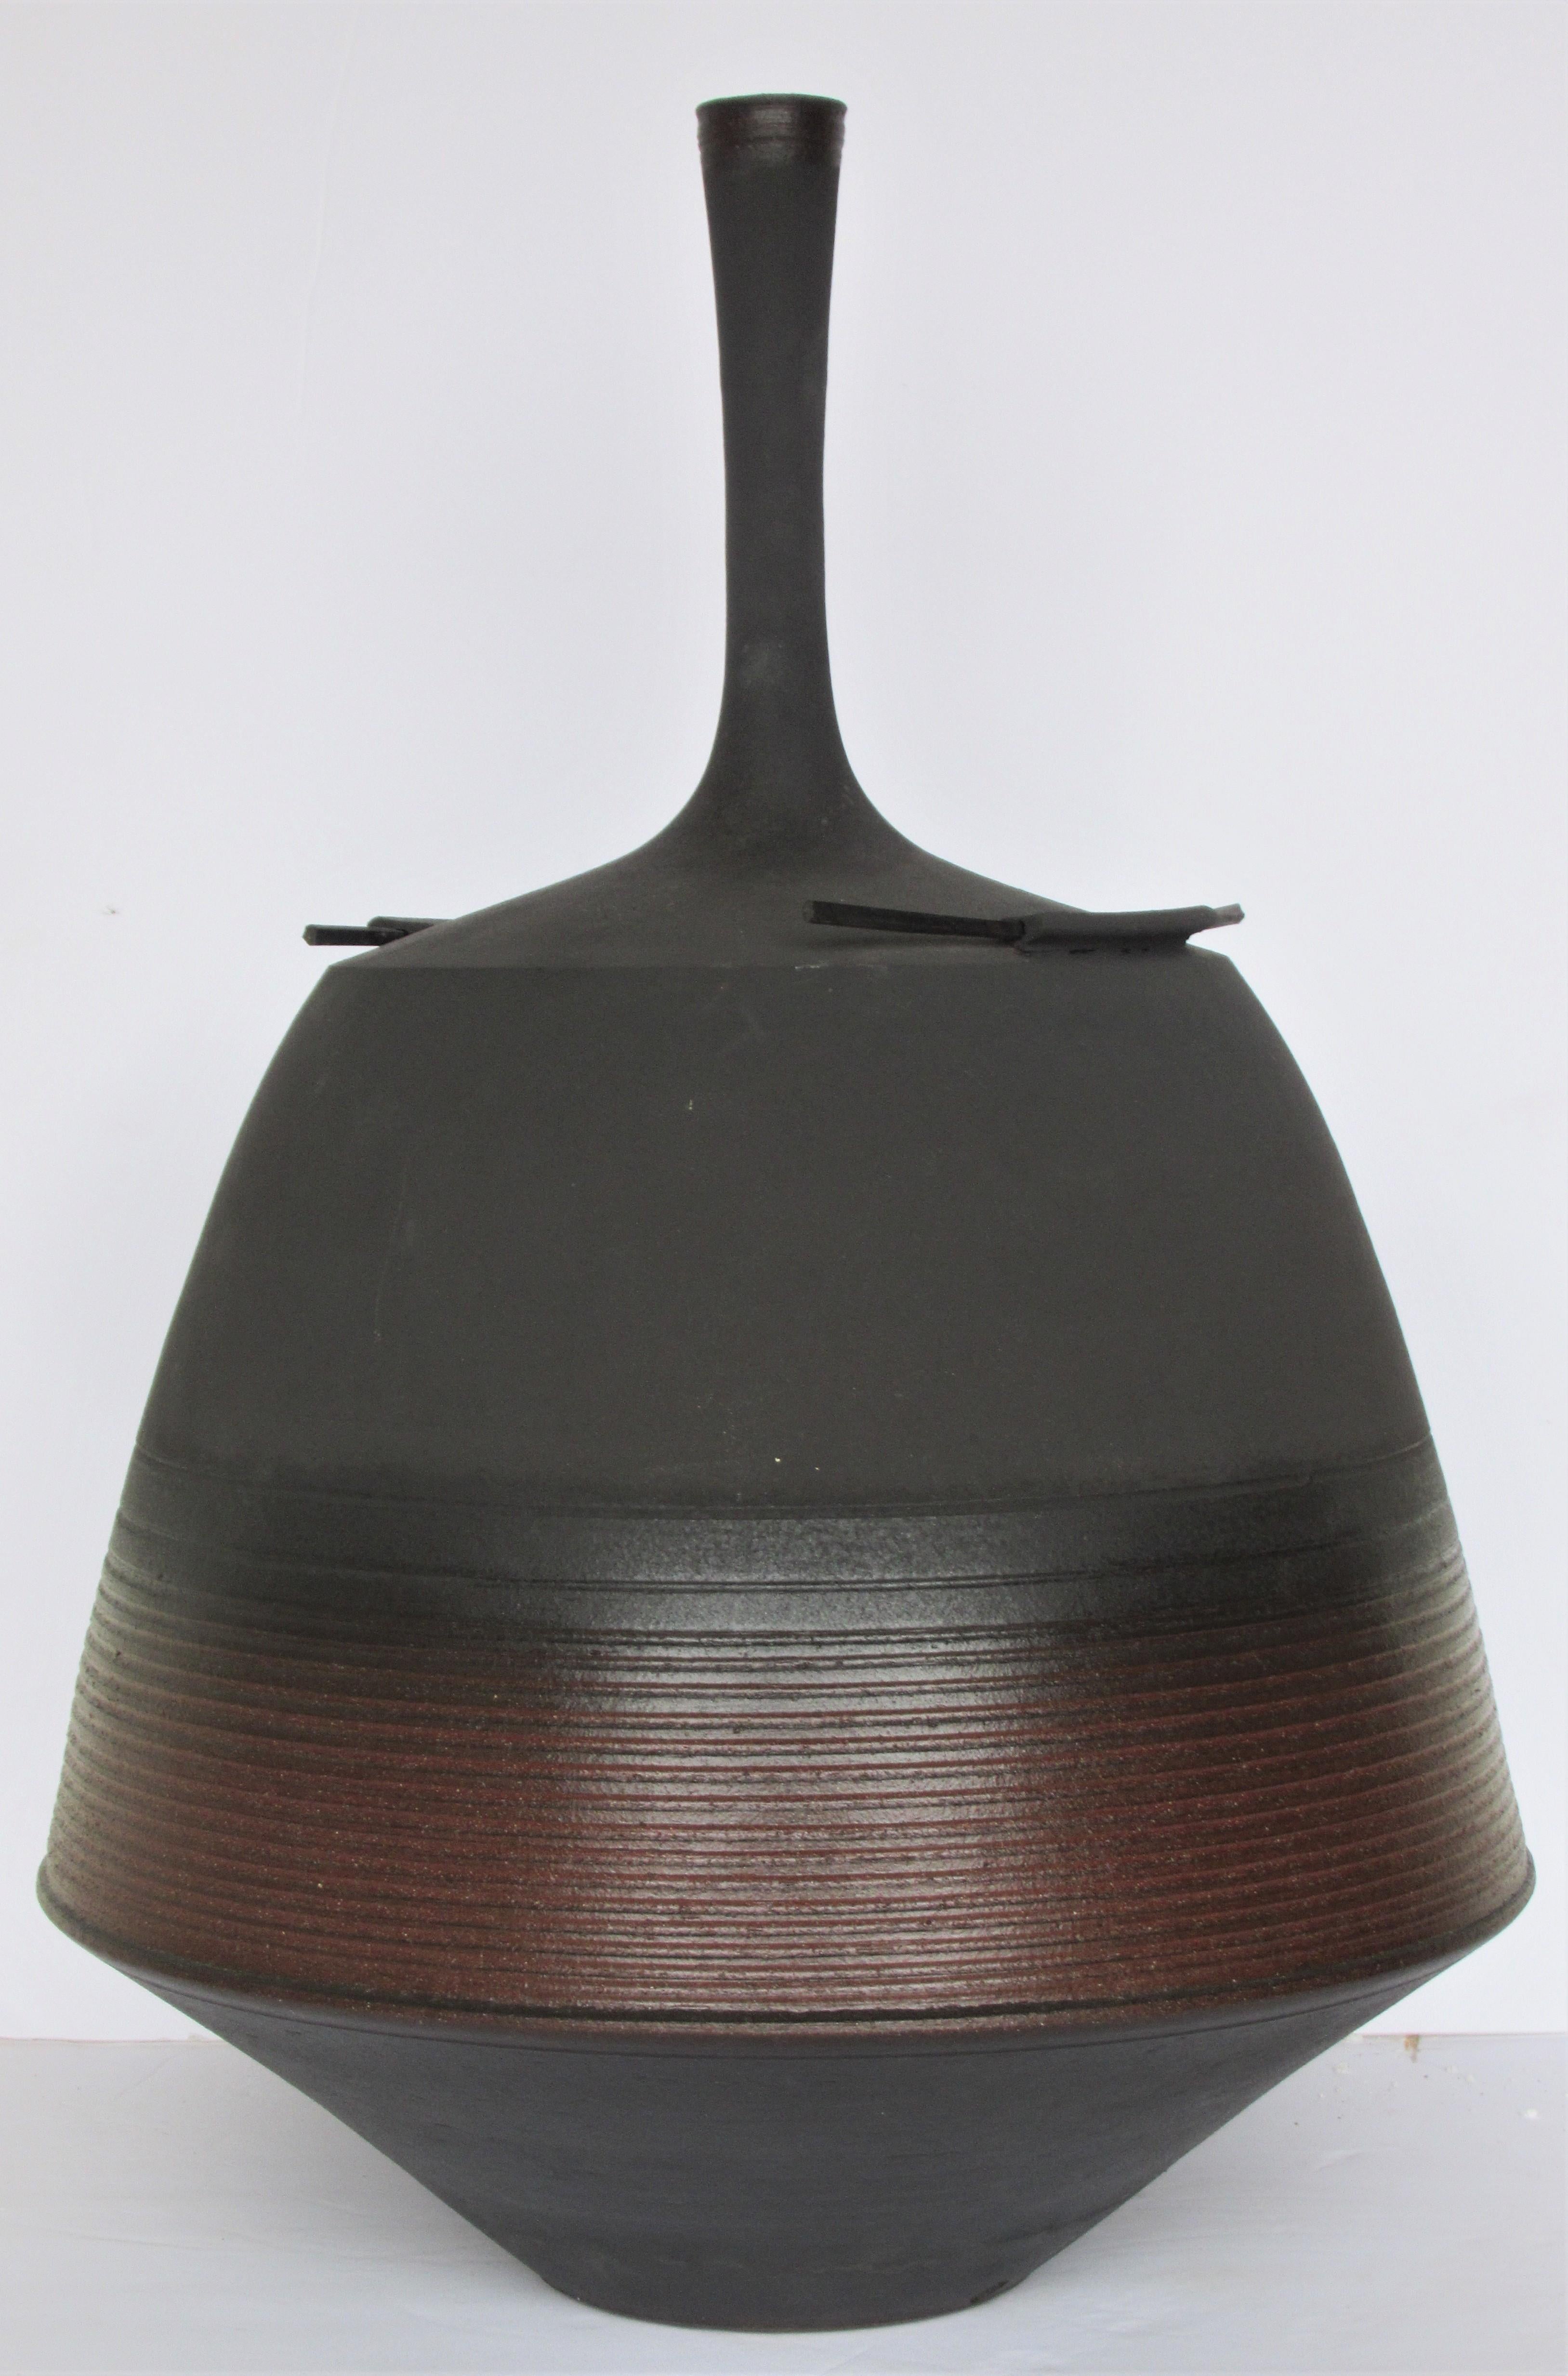  American Studio Ceramic Vessel by Stephen Merritt 3